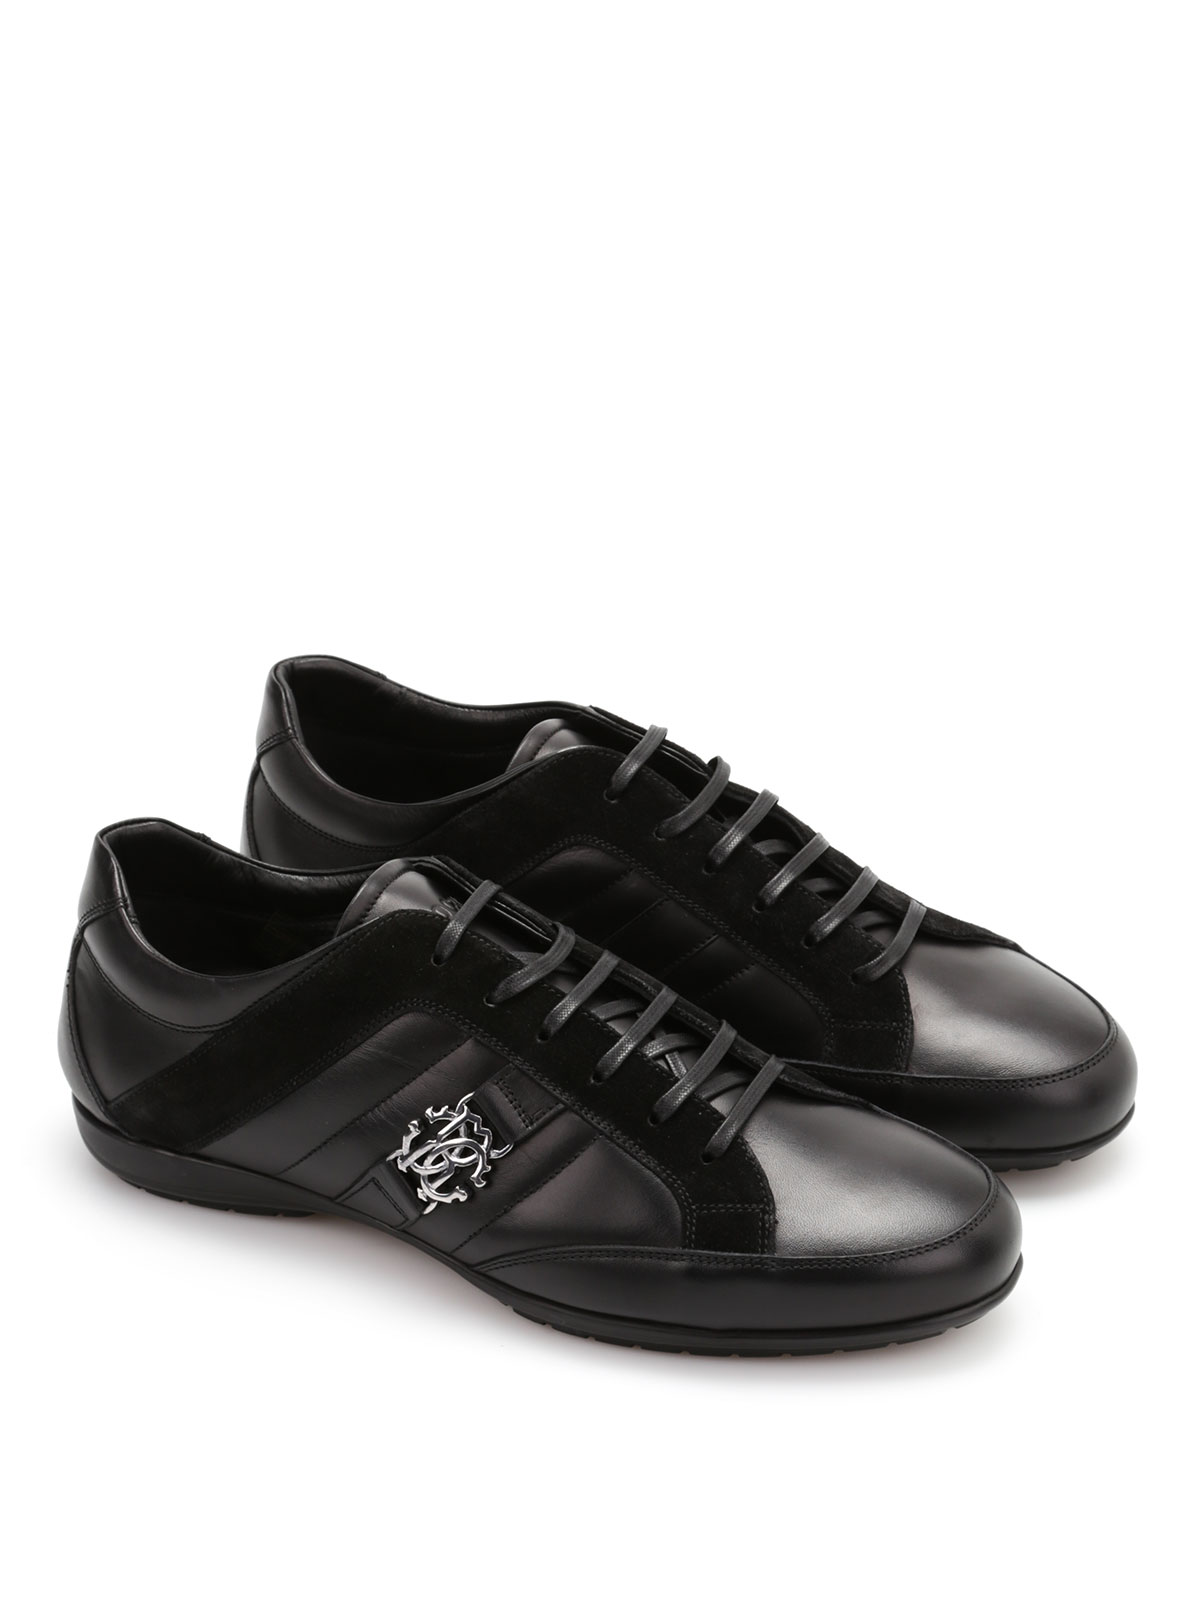 Roberto Cavalli Leather Trainers In Black